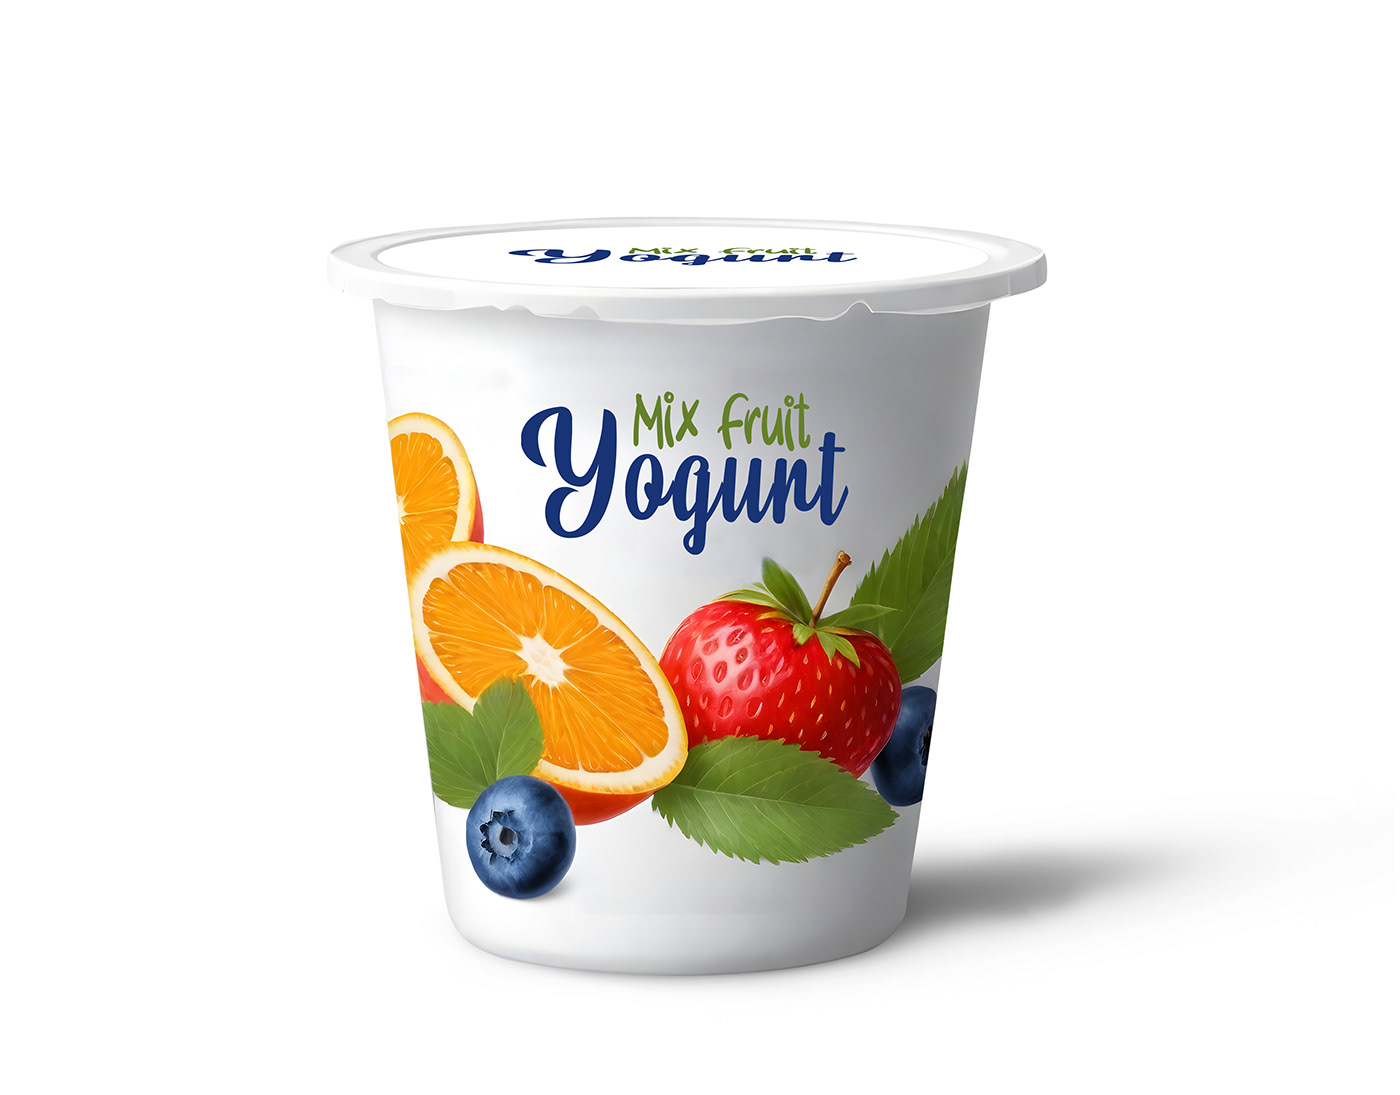 yogurt Yogurt Packaging fruit yogurt label design packaging design ice cream Ice Cream Packaging ice cream label yogurt bottle Yogurt Label